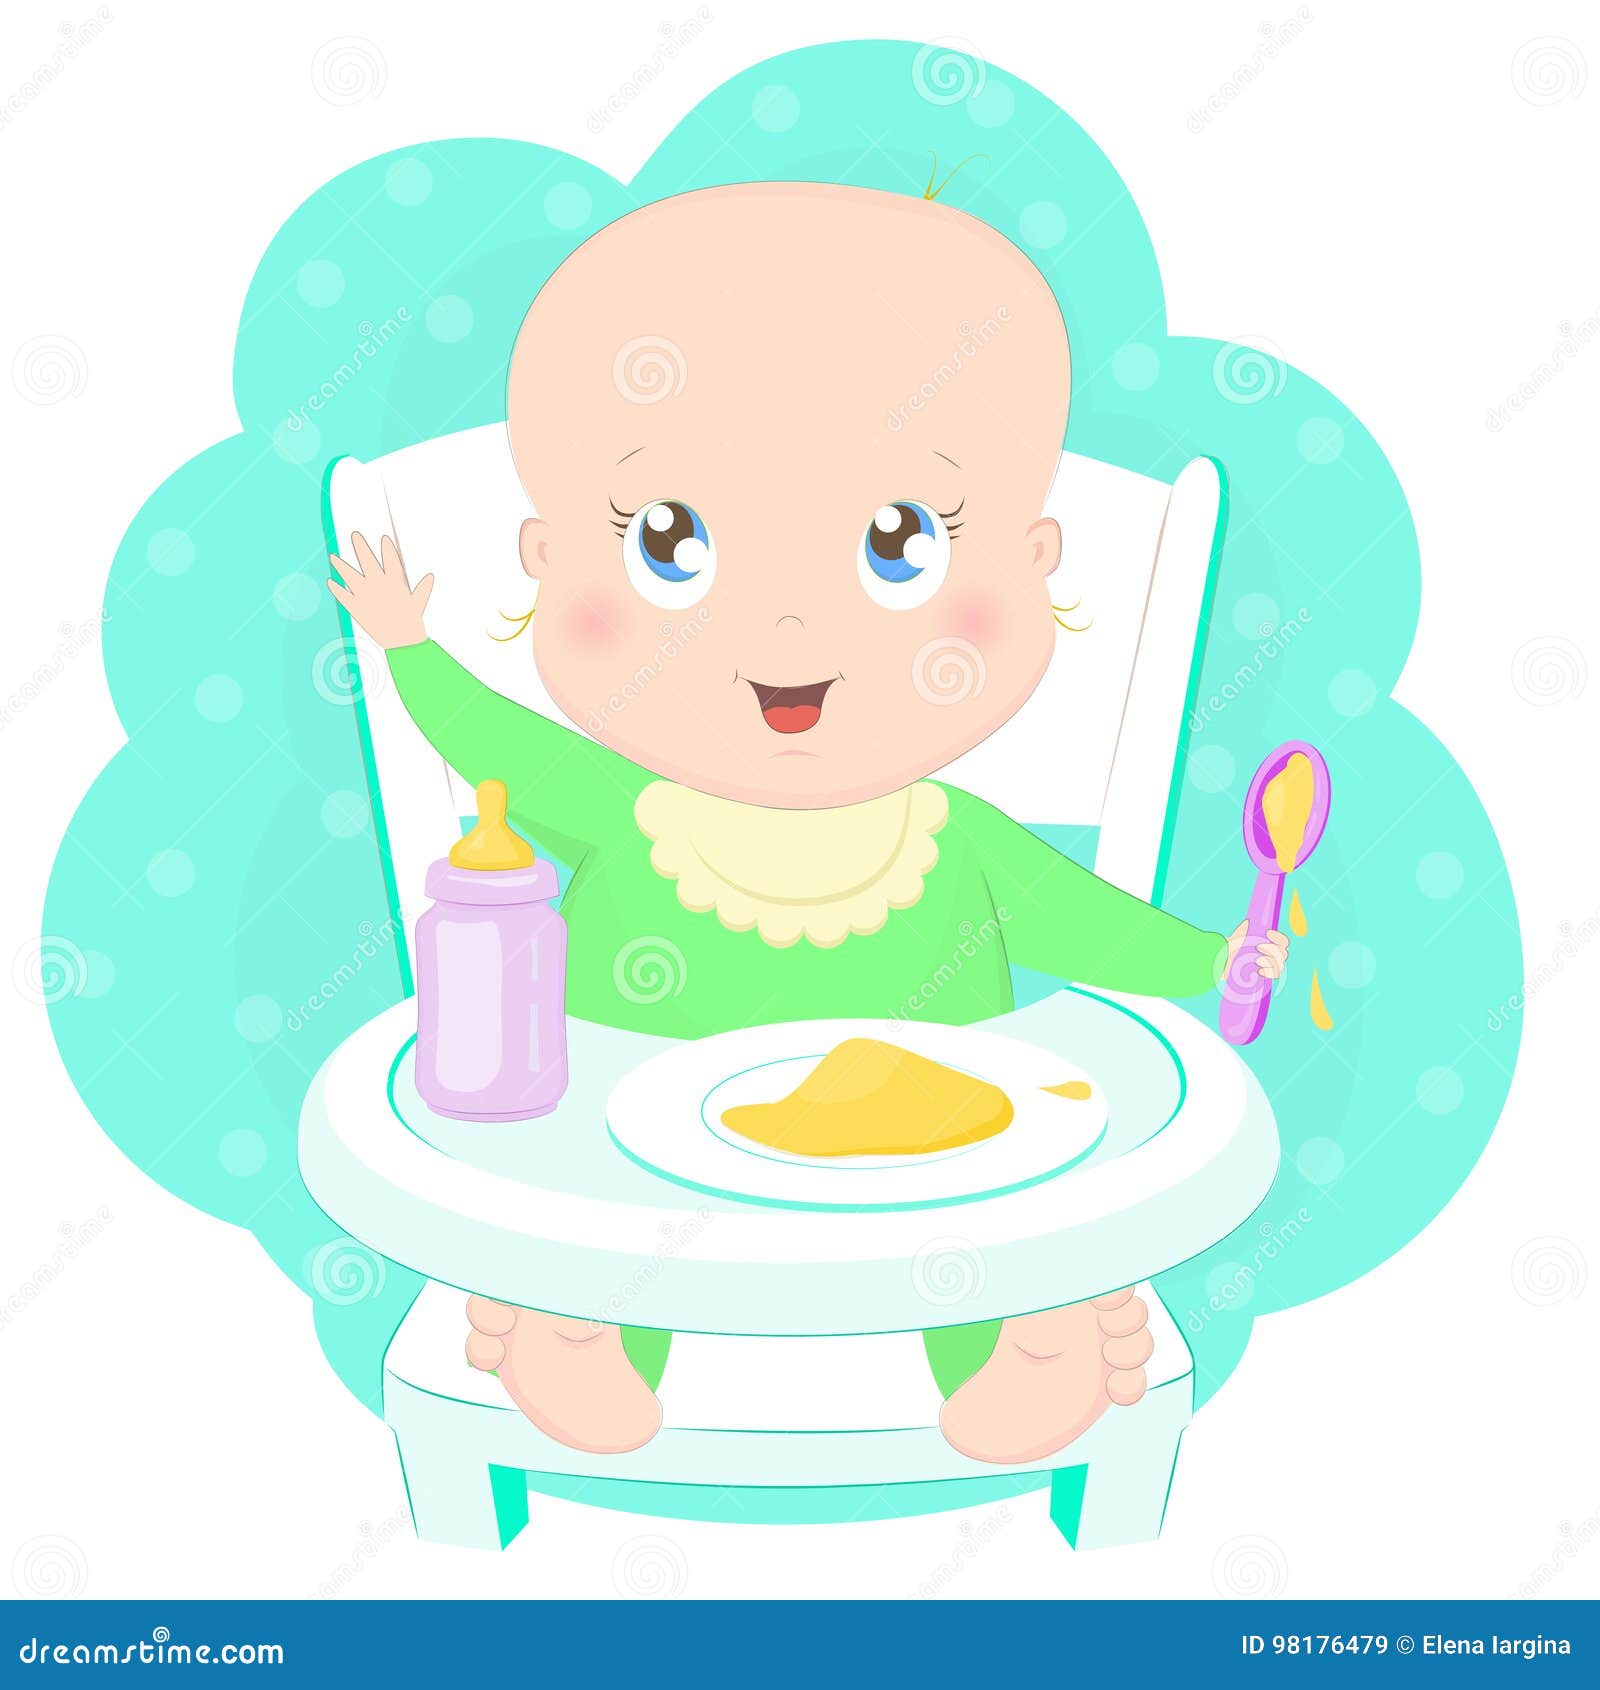 Cute baby eating porridge stock vector. Illustration of comic - 98176479